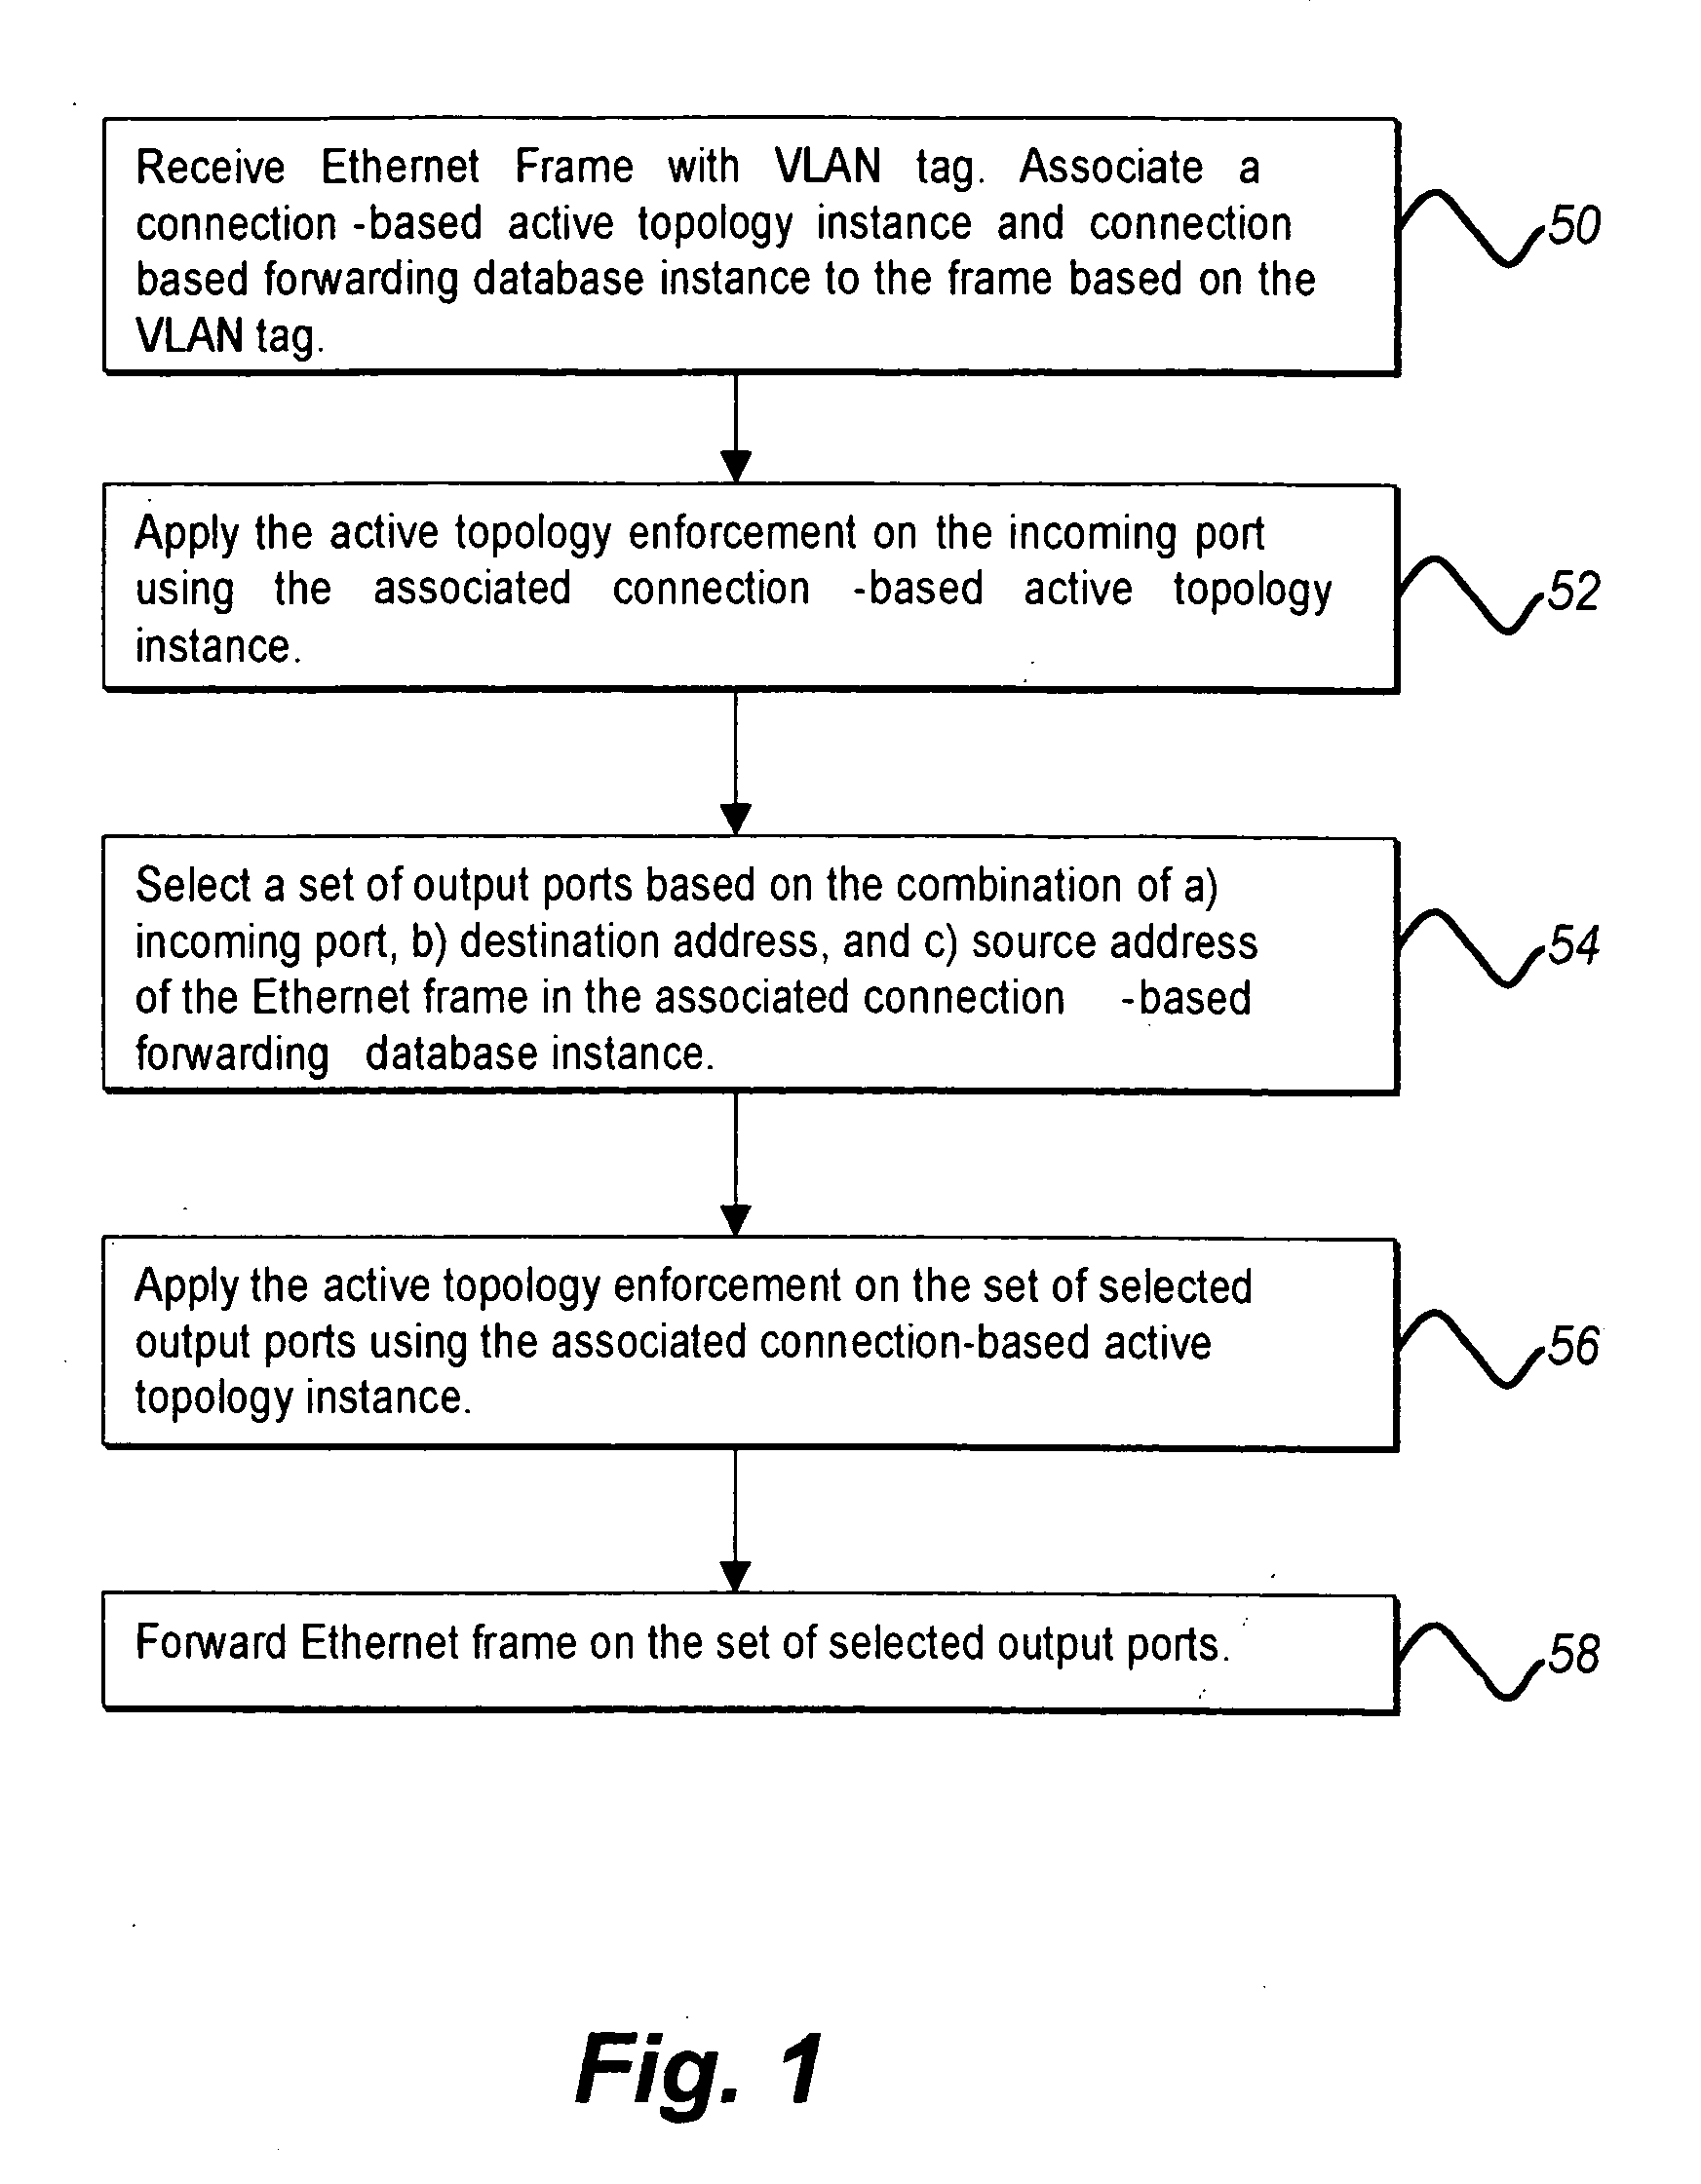 Ethernet connection-based forwarding process